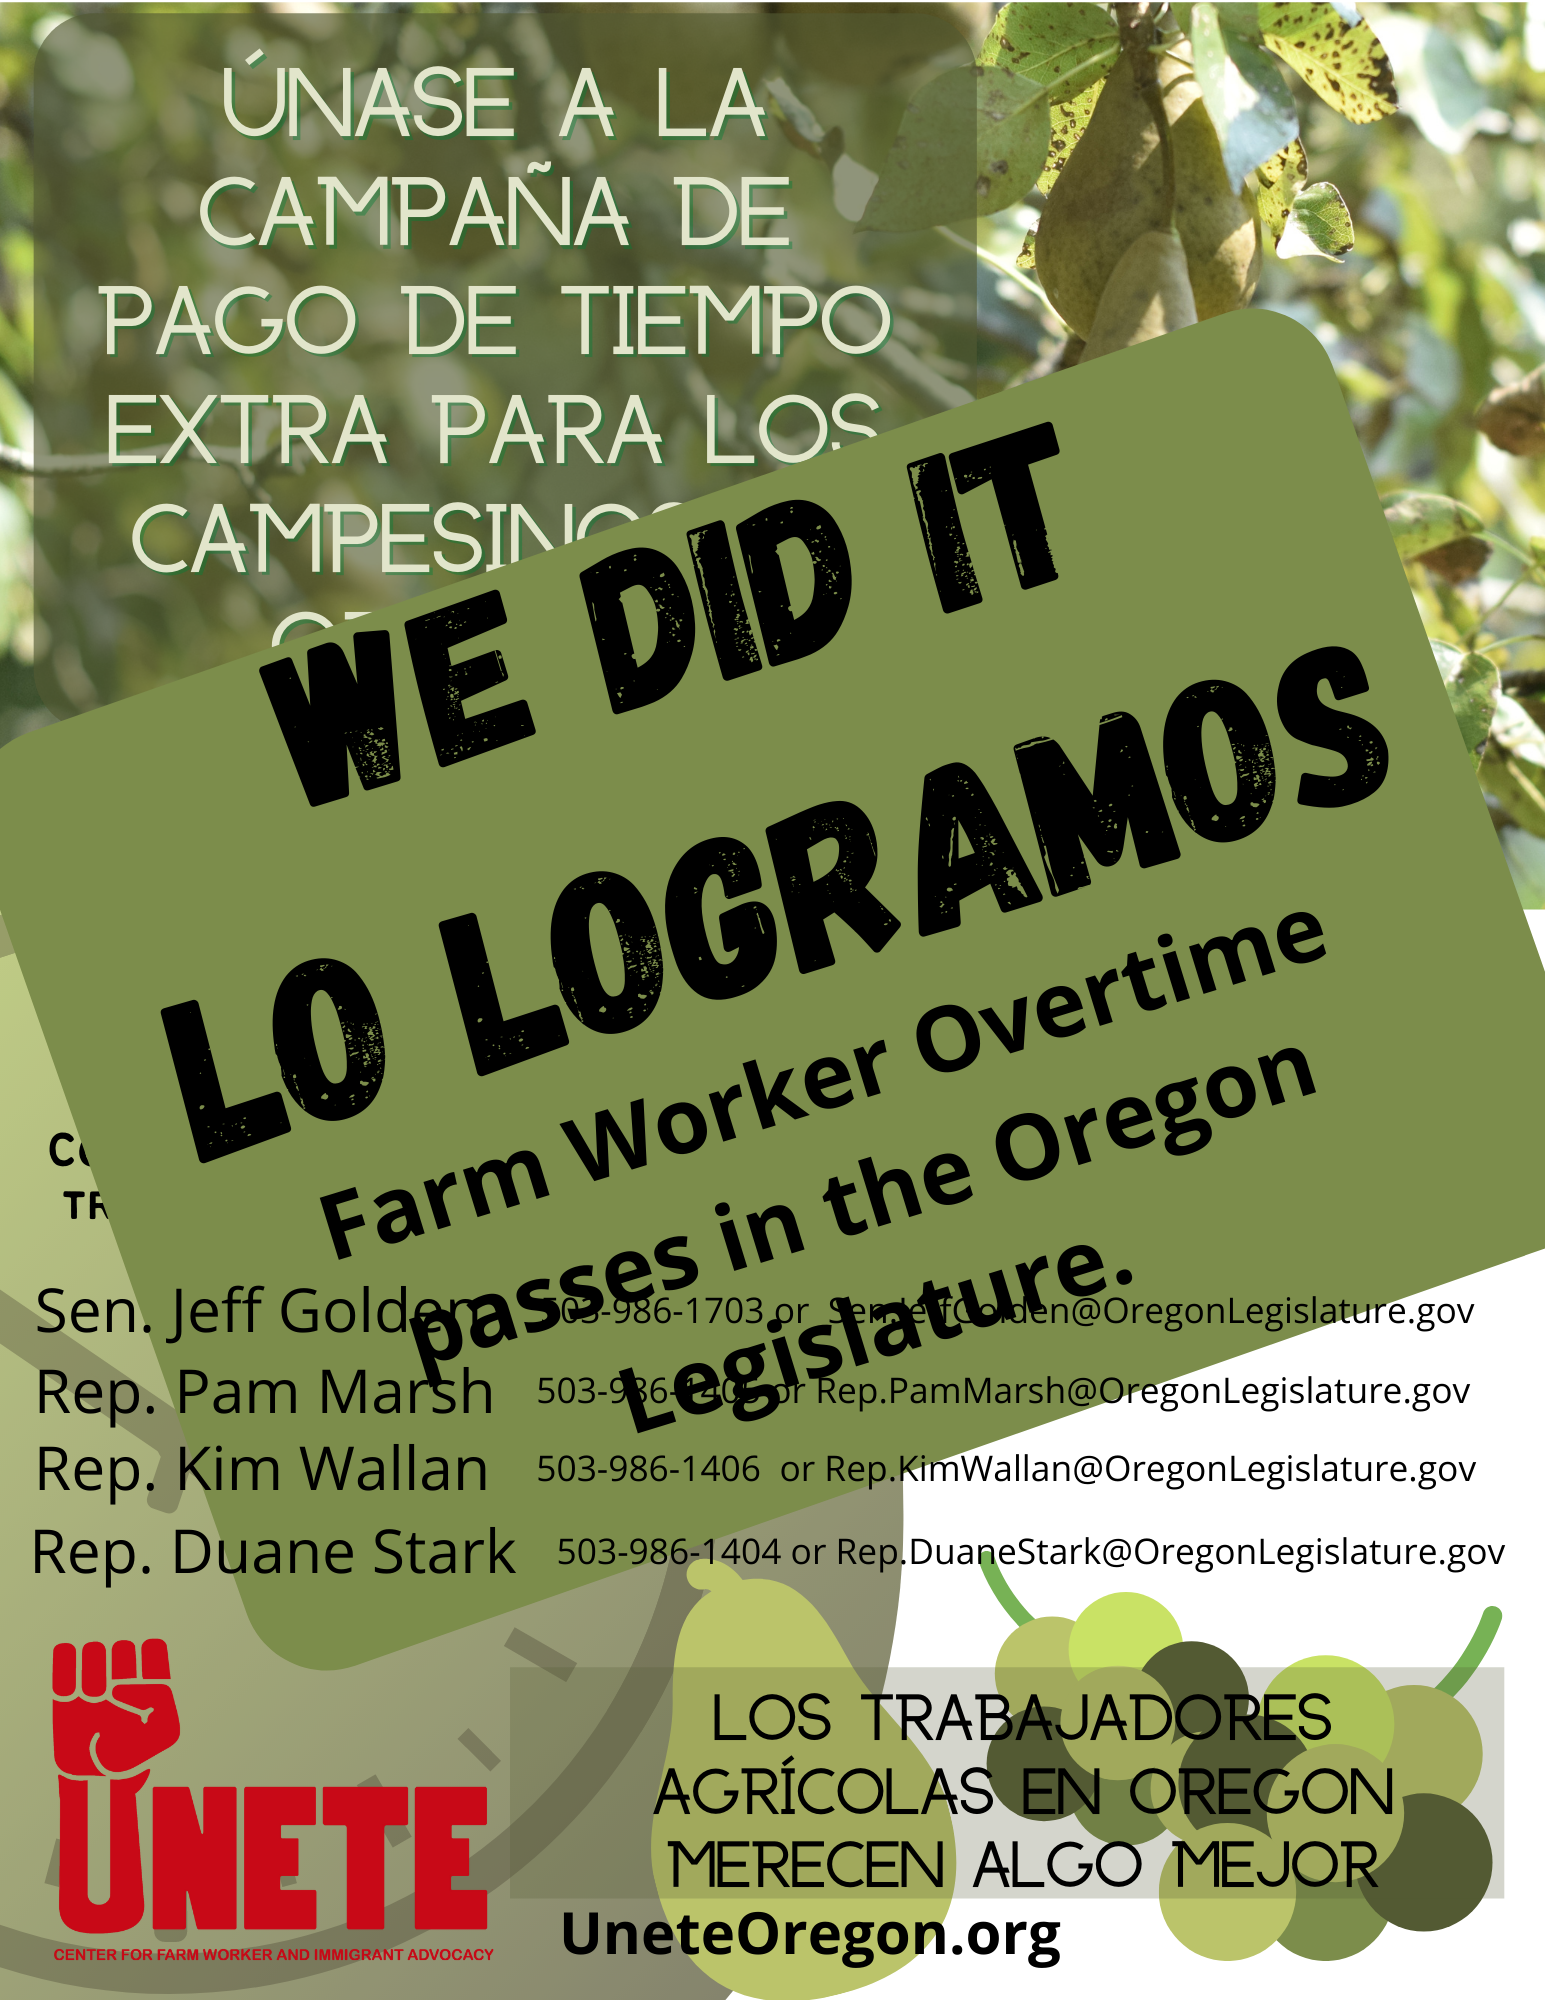 Overtime for Oregon Farm Workers passes in the Oregon Legislature!